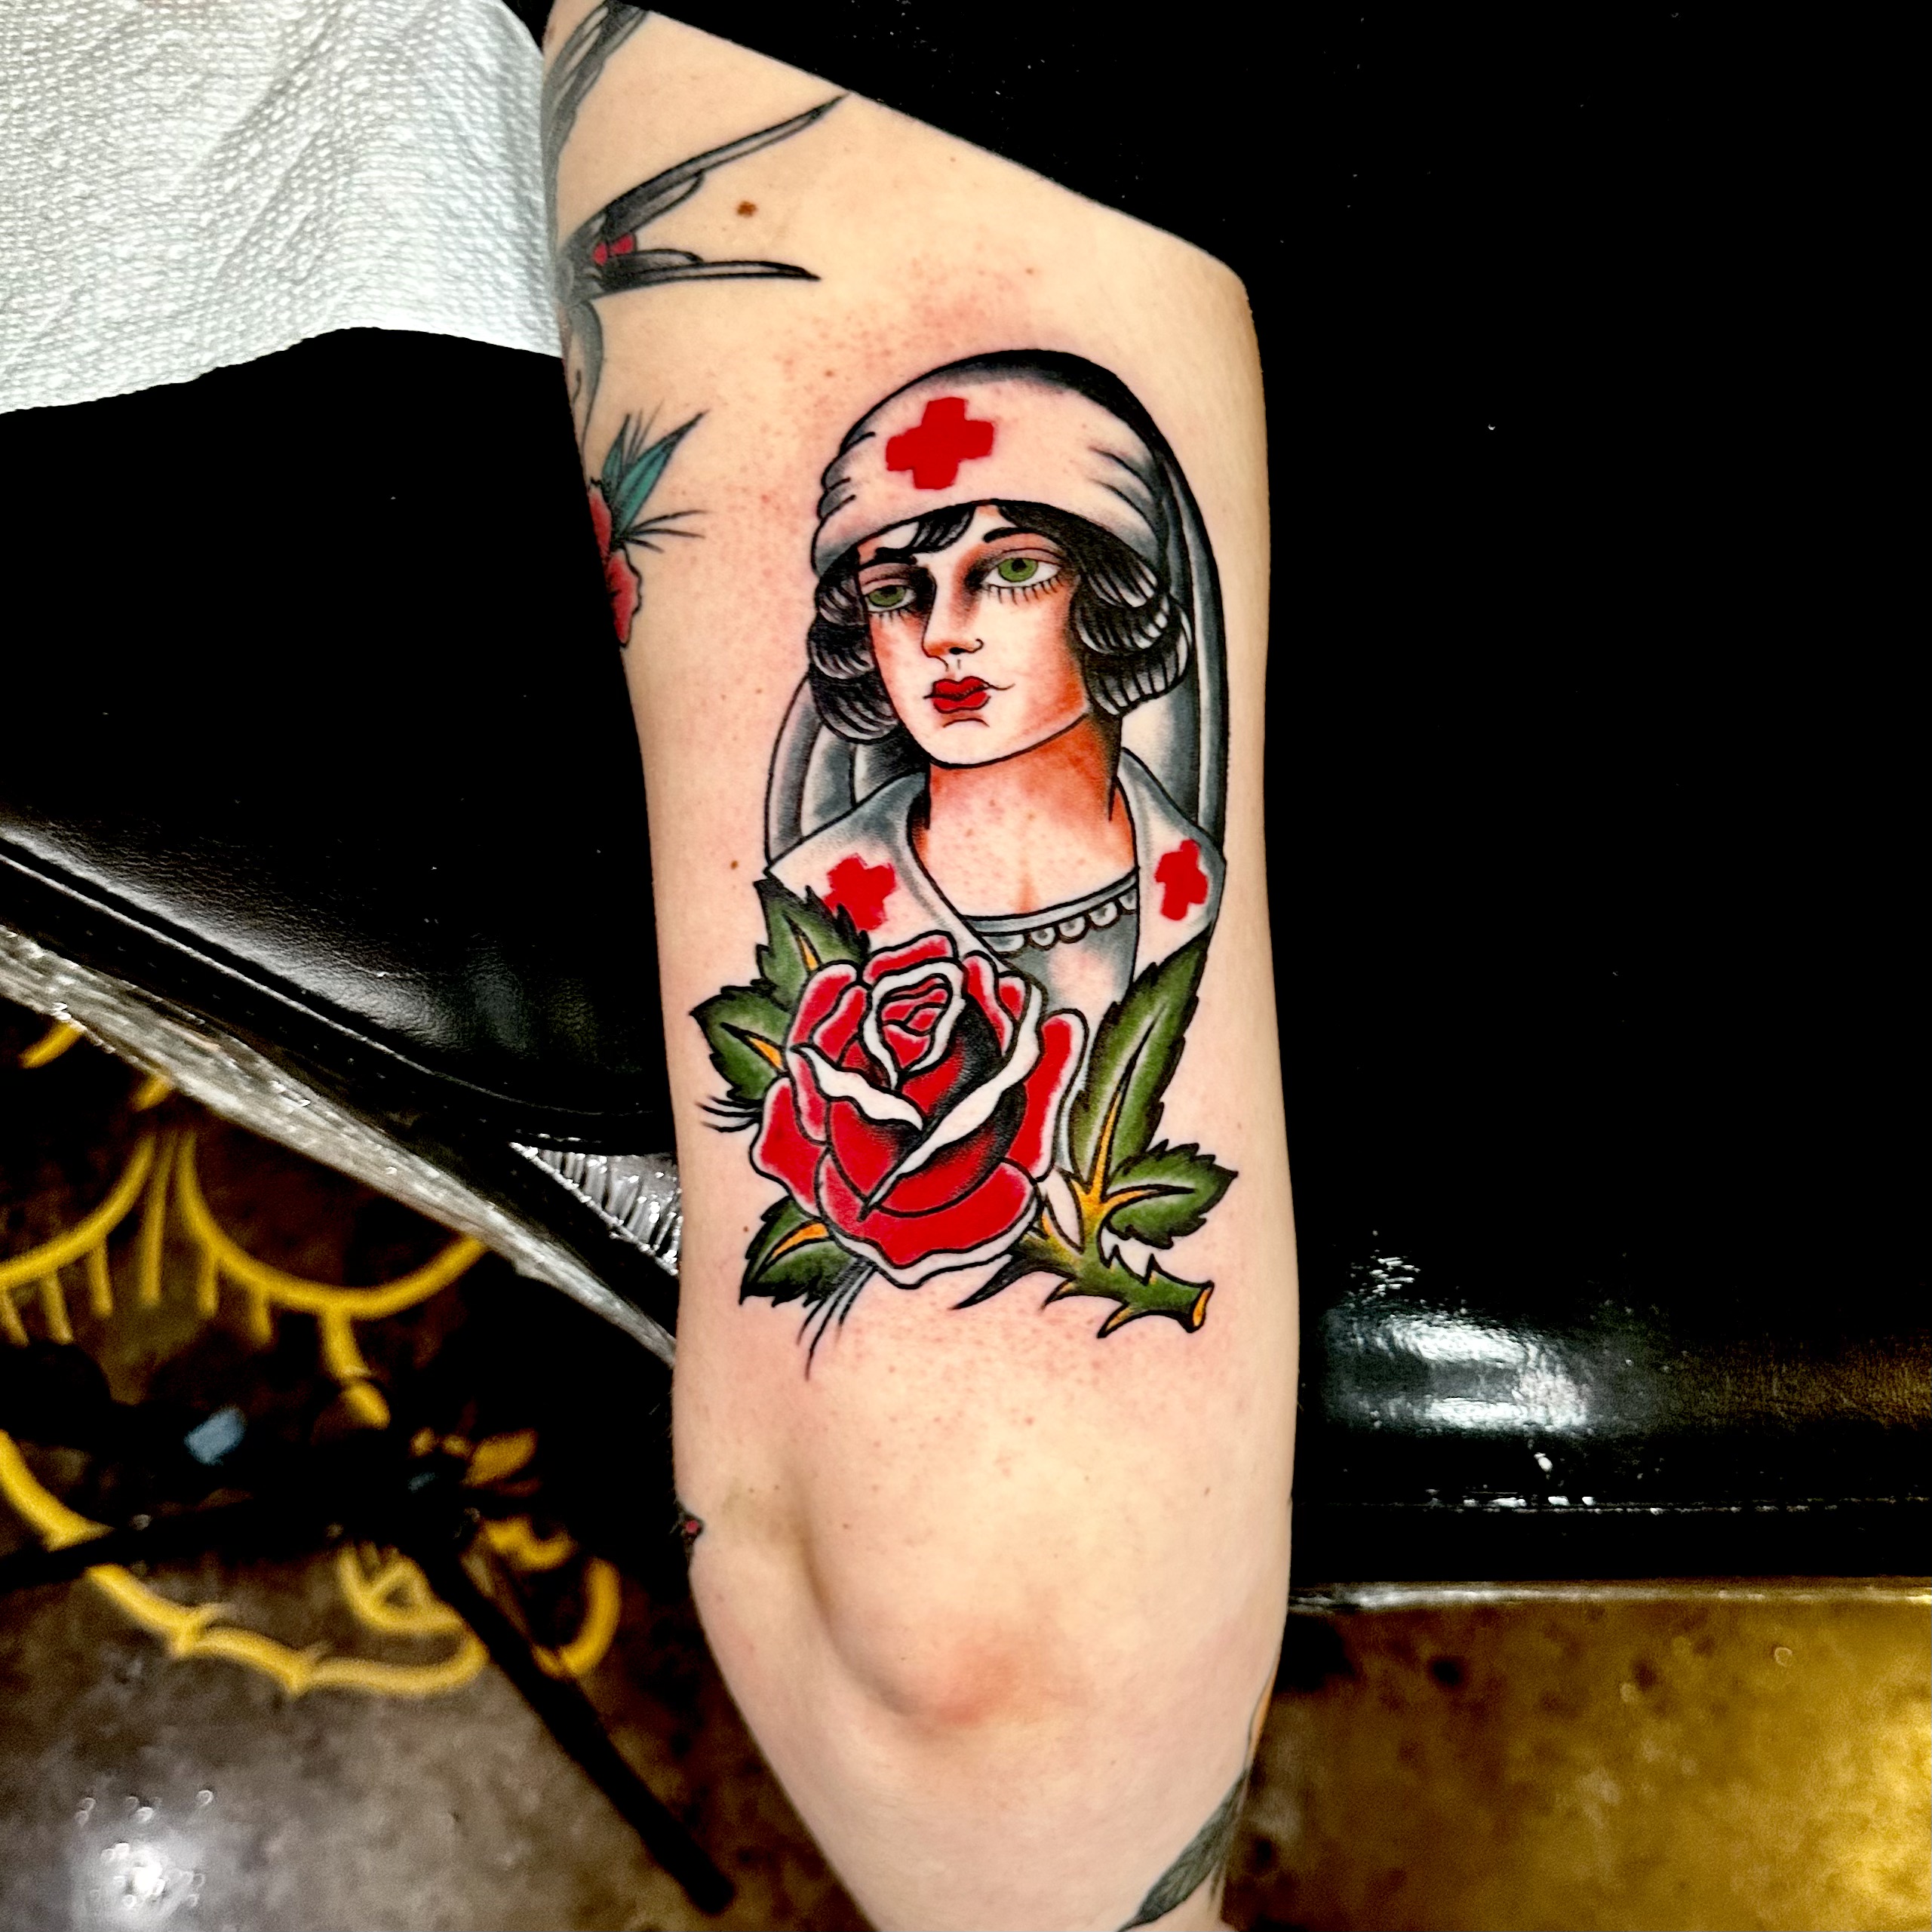 Tattoo of a nurse and a rose